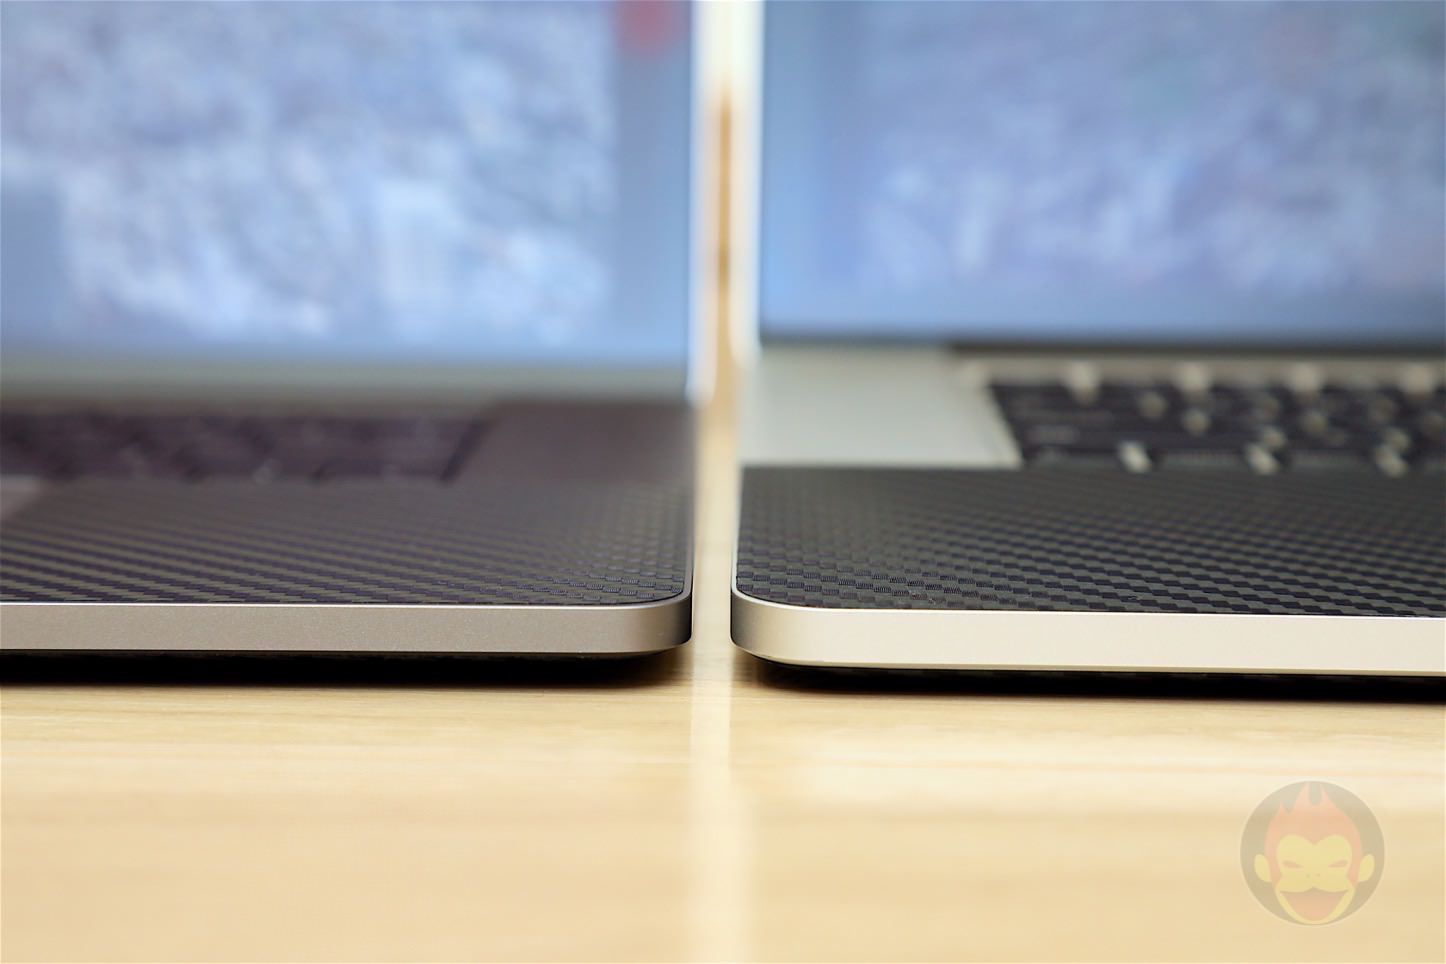 MacBook-Pro-15inch-2015-2016-comparison-12.jpg